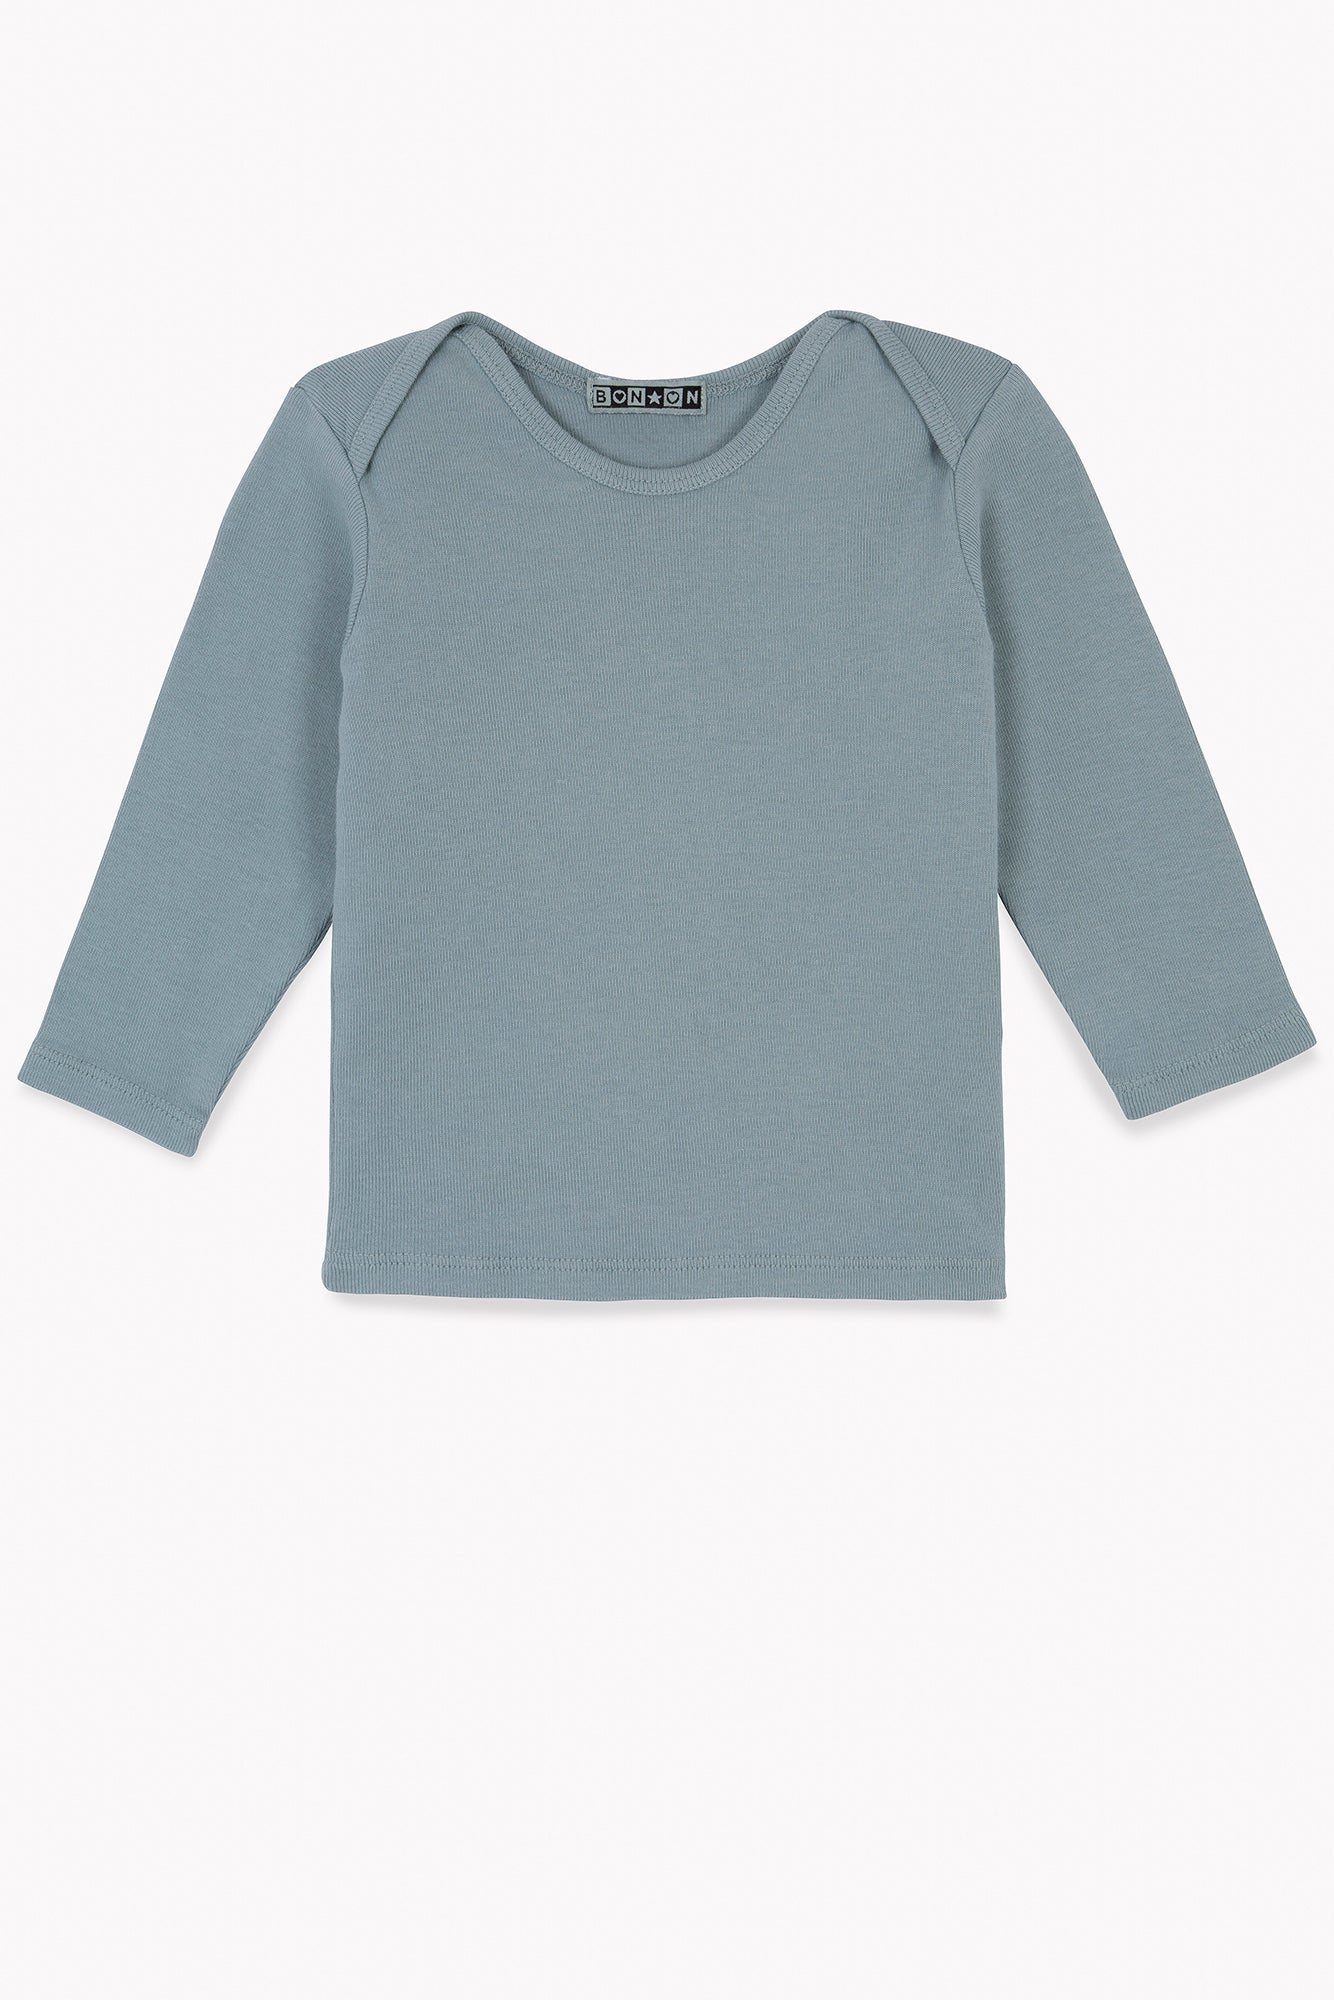 Tee-shirt Tina bleu Bébé en 100% coton biologique